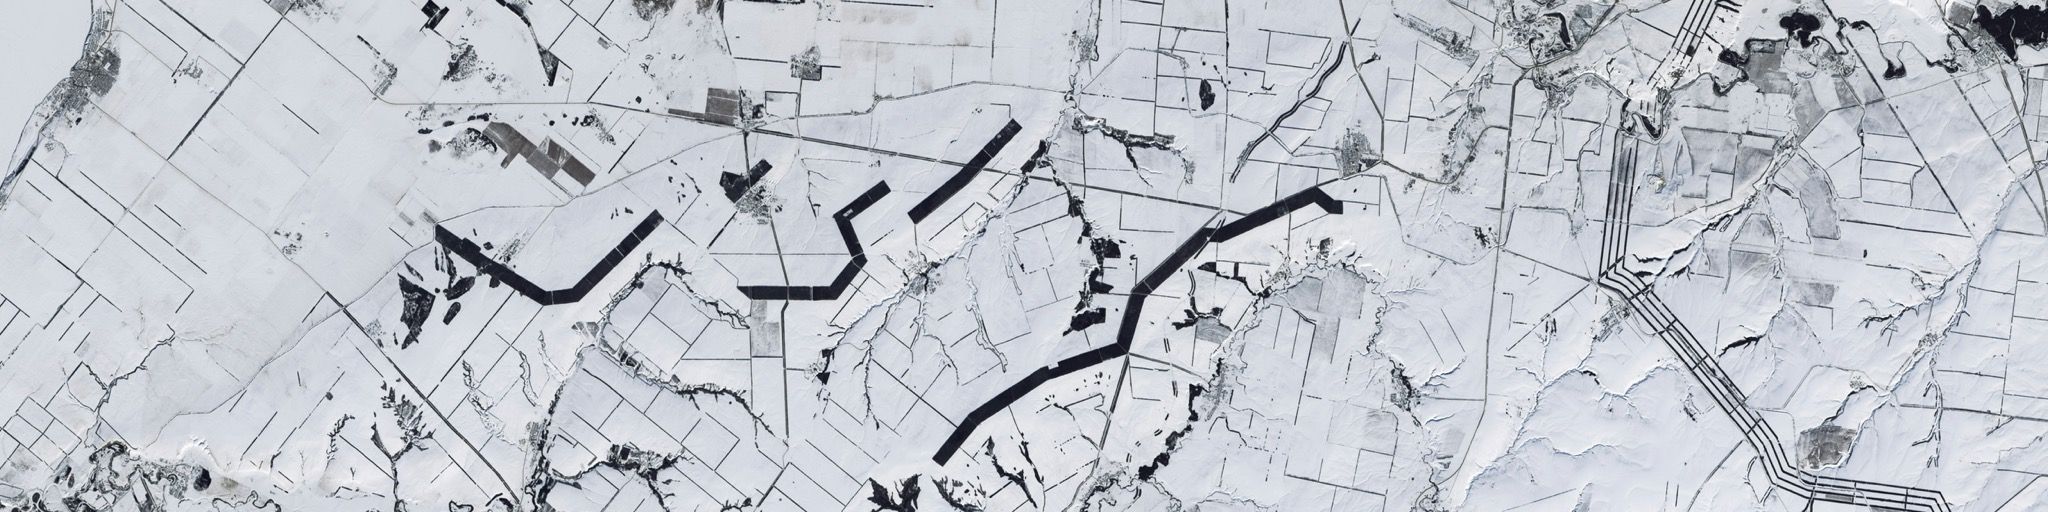 Landsat maps in black and white